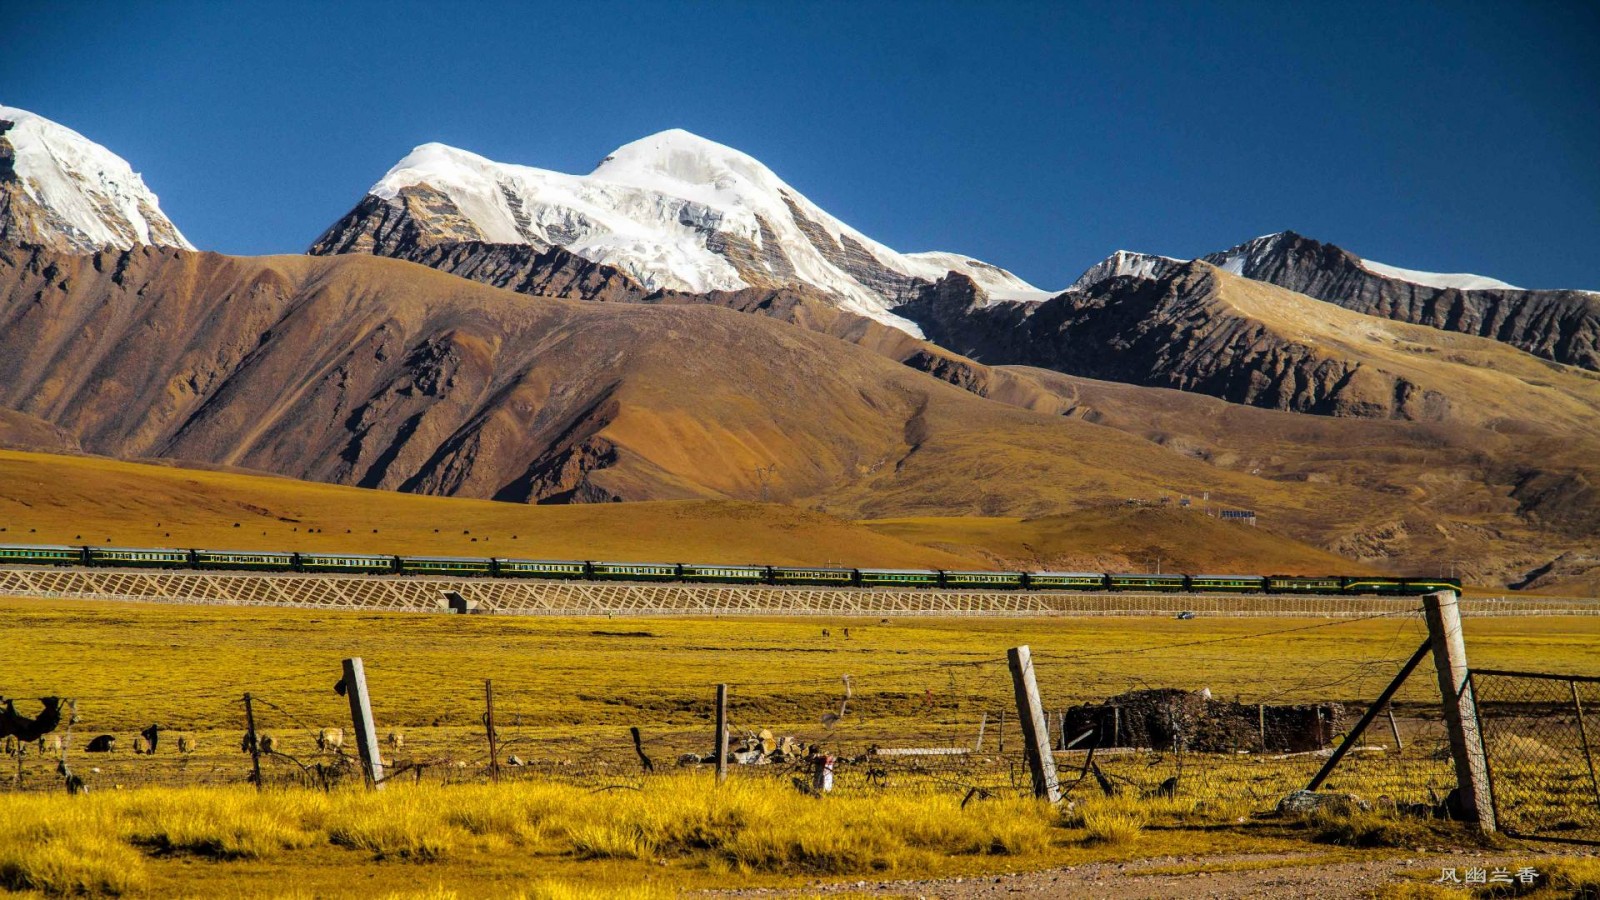 Tibet mountain ranges